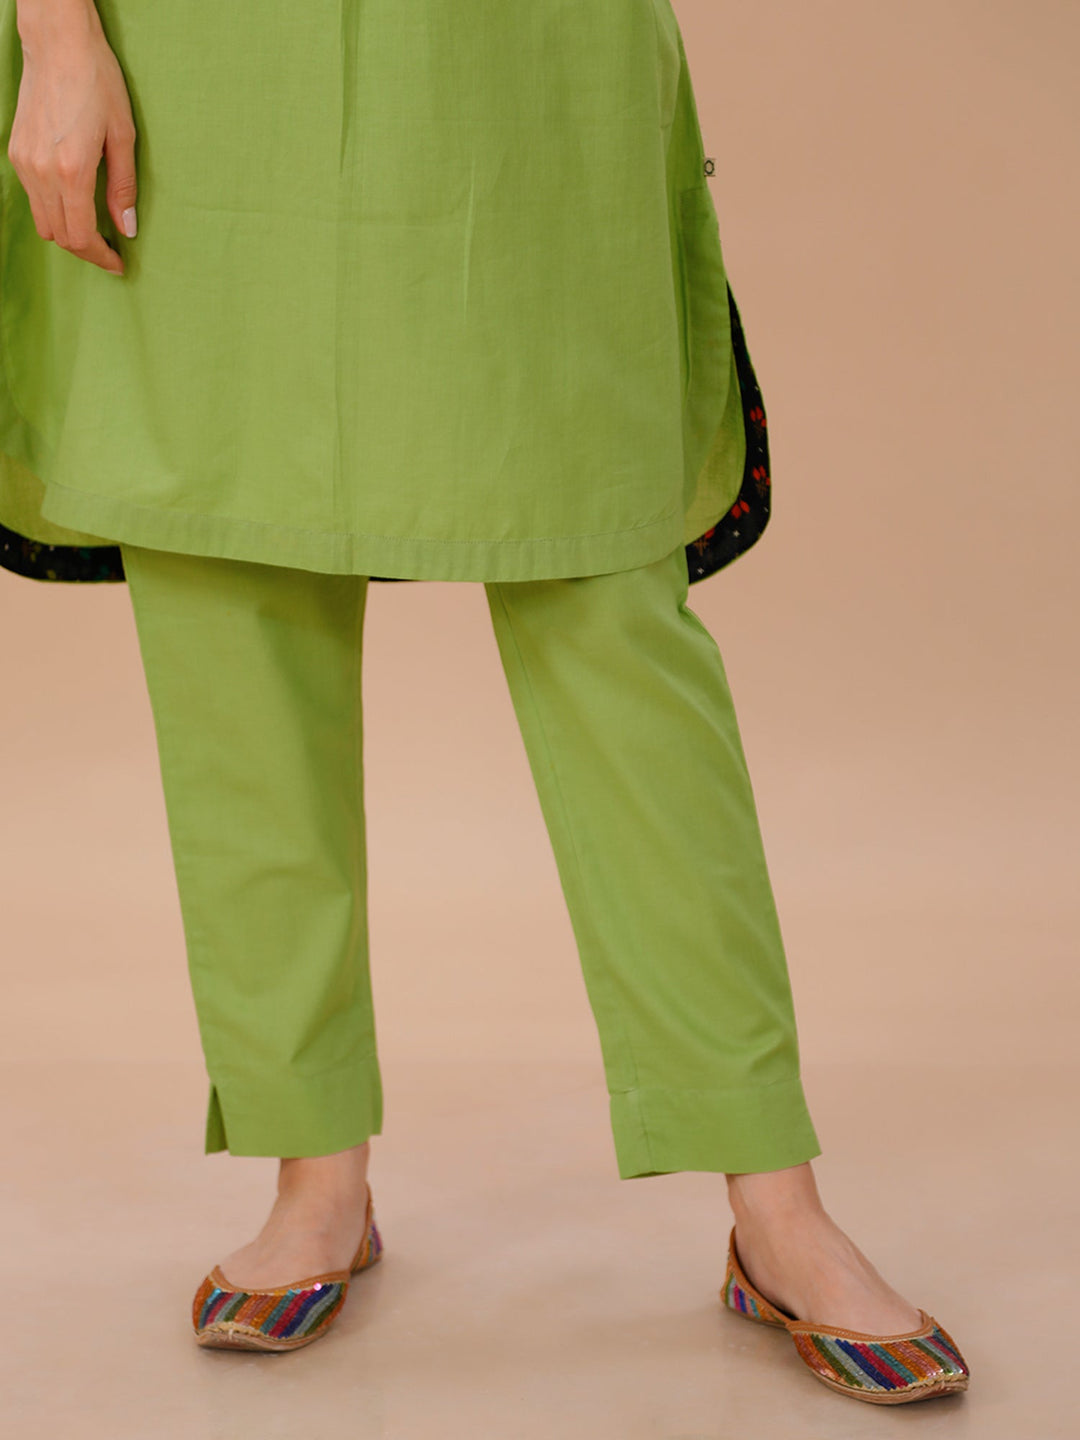 Palette Leaf Green Cotton Kurta and Pants Set